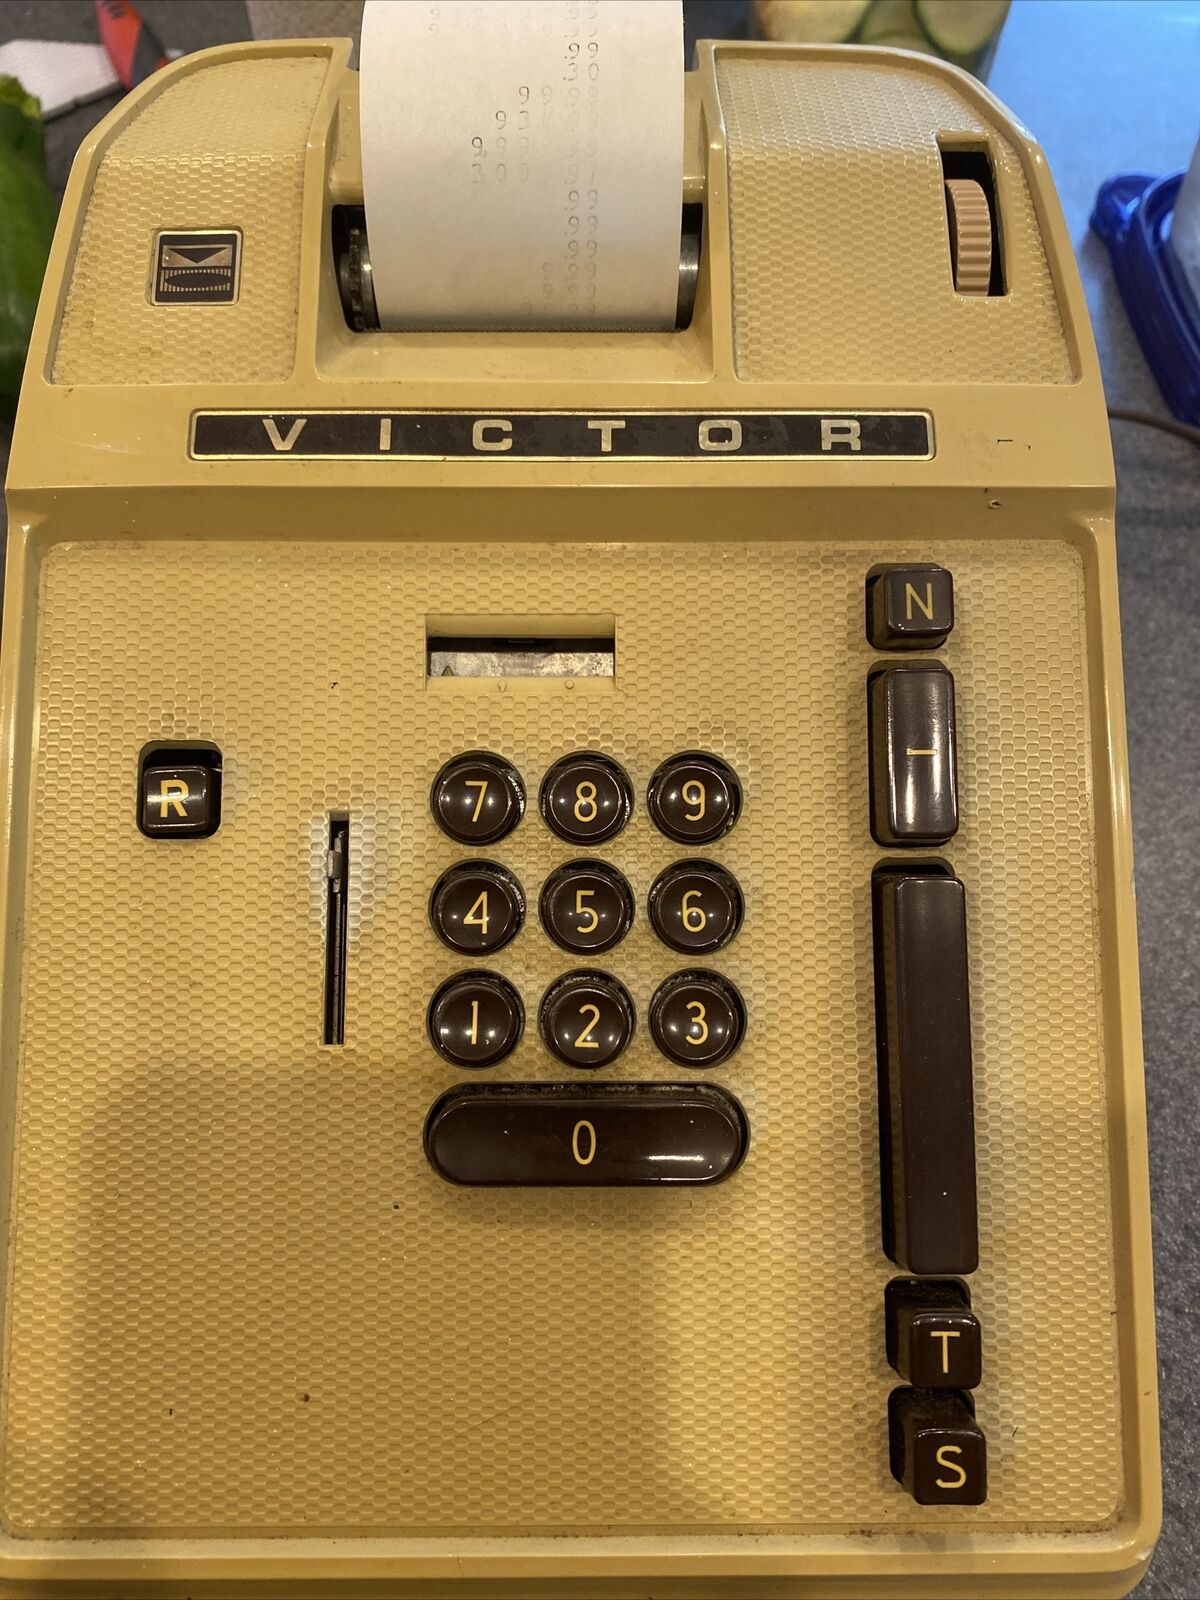 victor vintage Adding Machine Model: 17 83 54 - Turns On